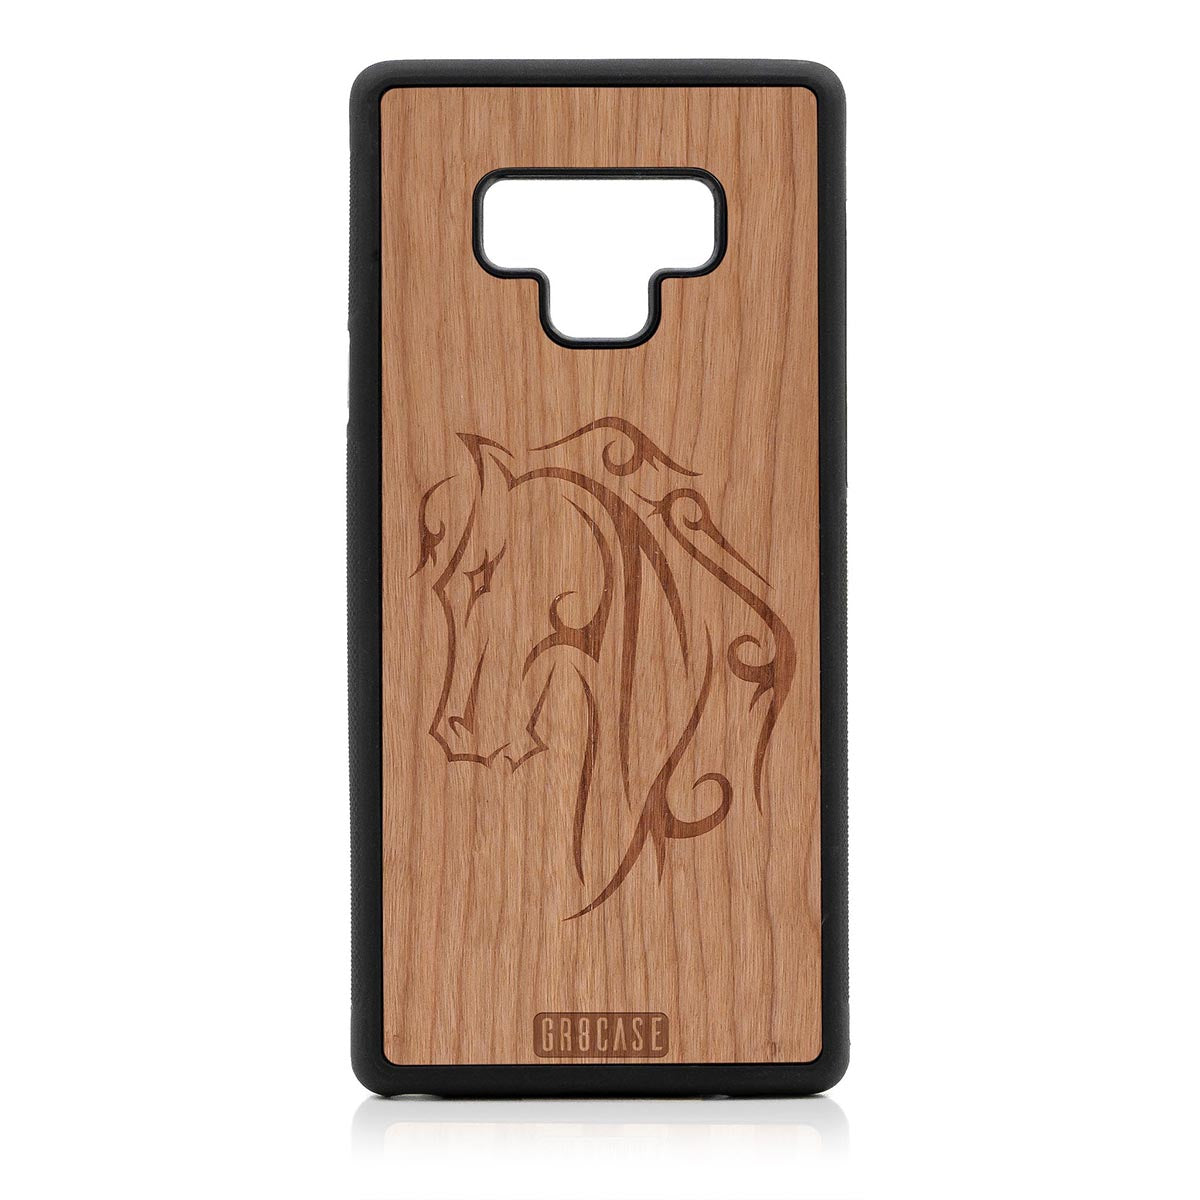 Horse Tattoo Design Wood Case Samsung Galaxy Note 9 by GR8CASE